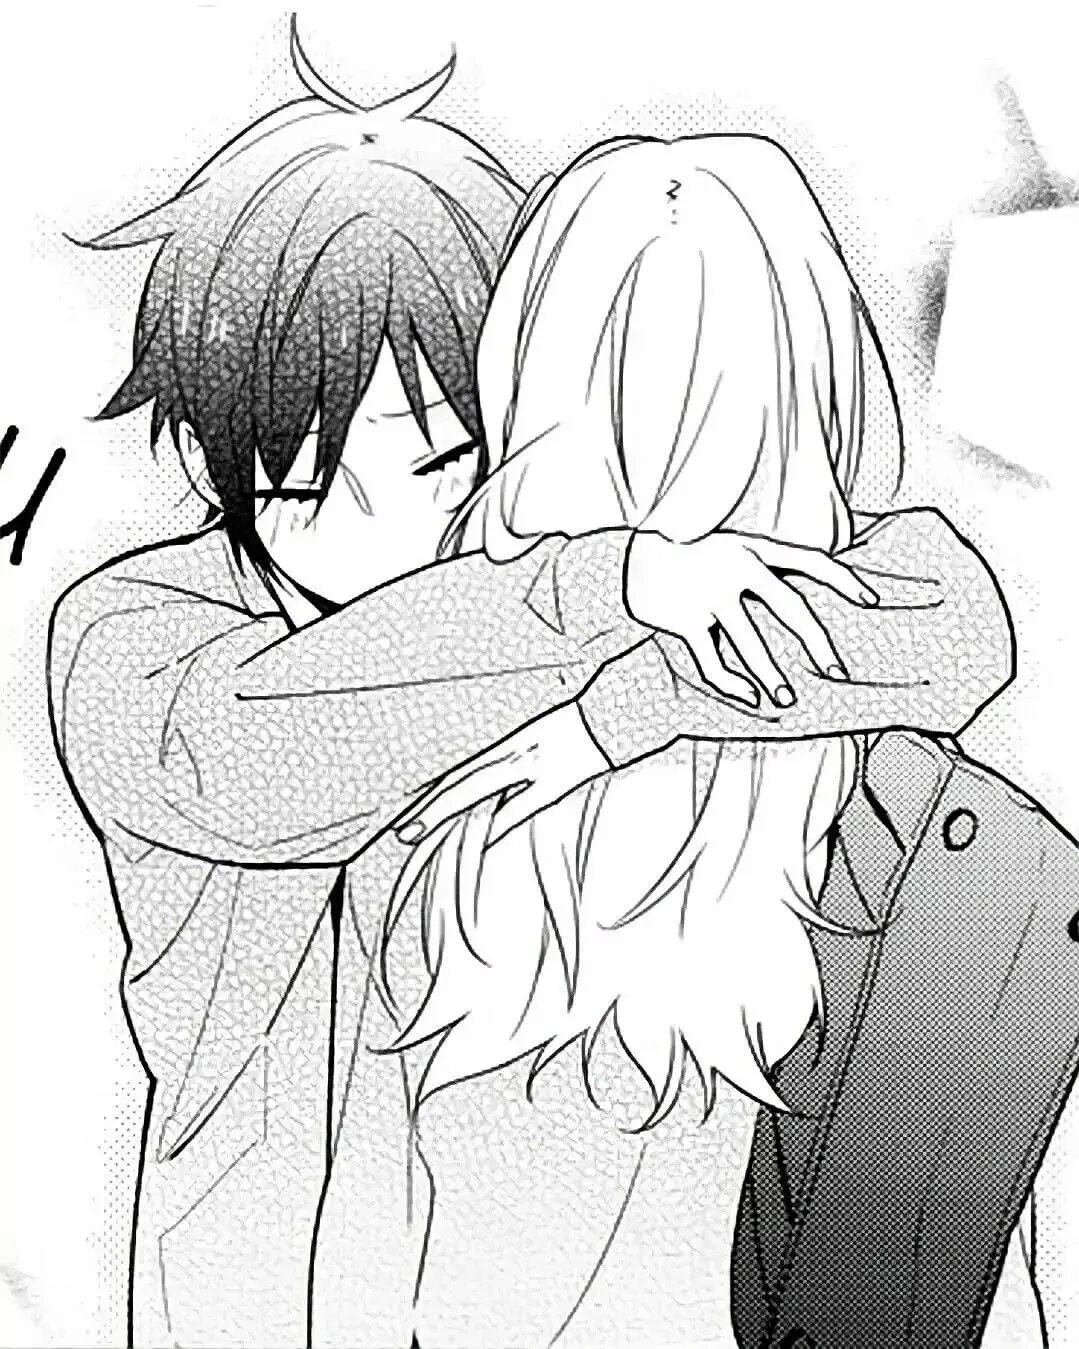 Манга обнимающий звезду мастер. Horimiya Manga любовь. Хоримия обнимашки. Хоримия поцелуй.